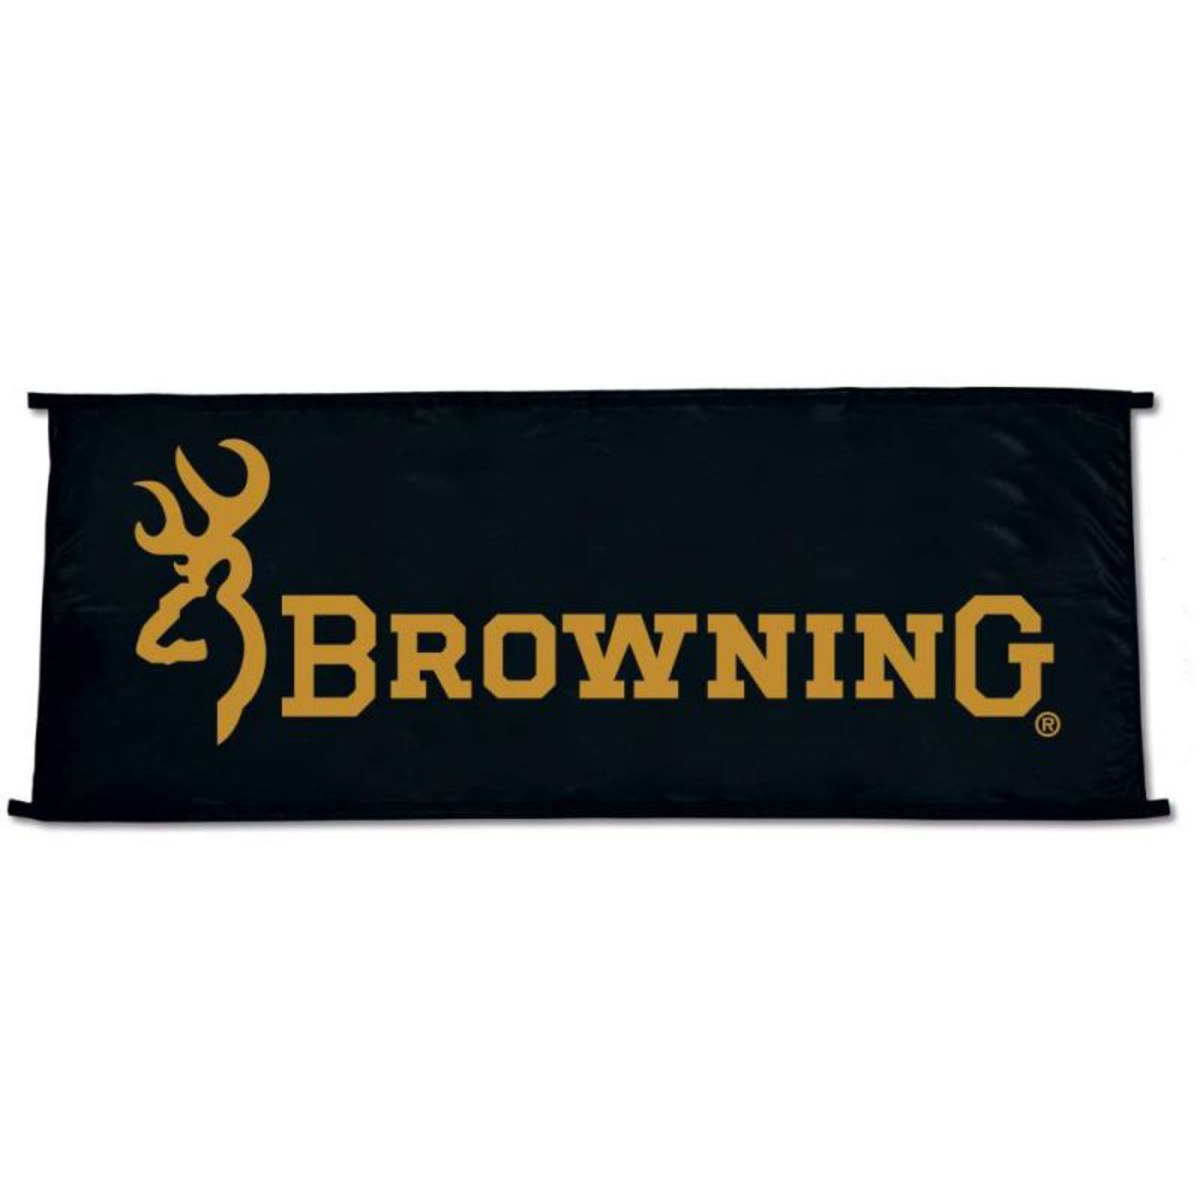 Browning Banner - 200 cm x 80 cm